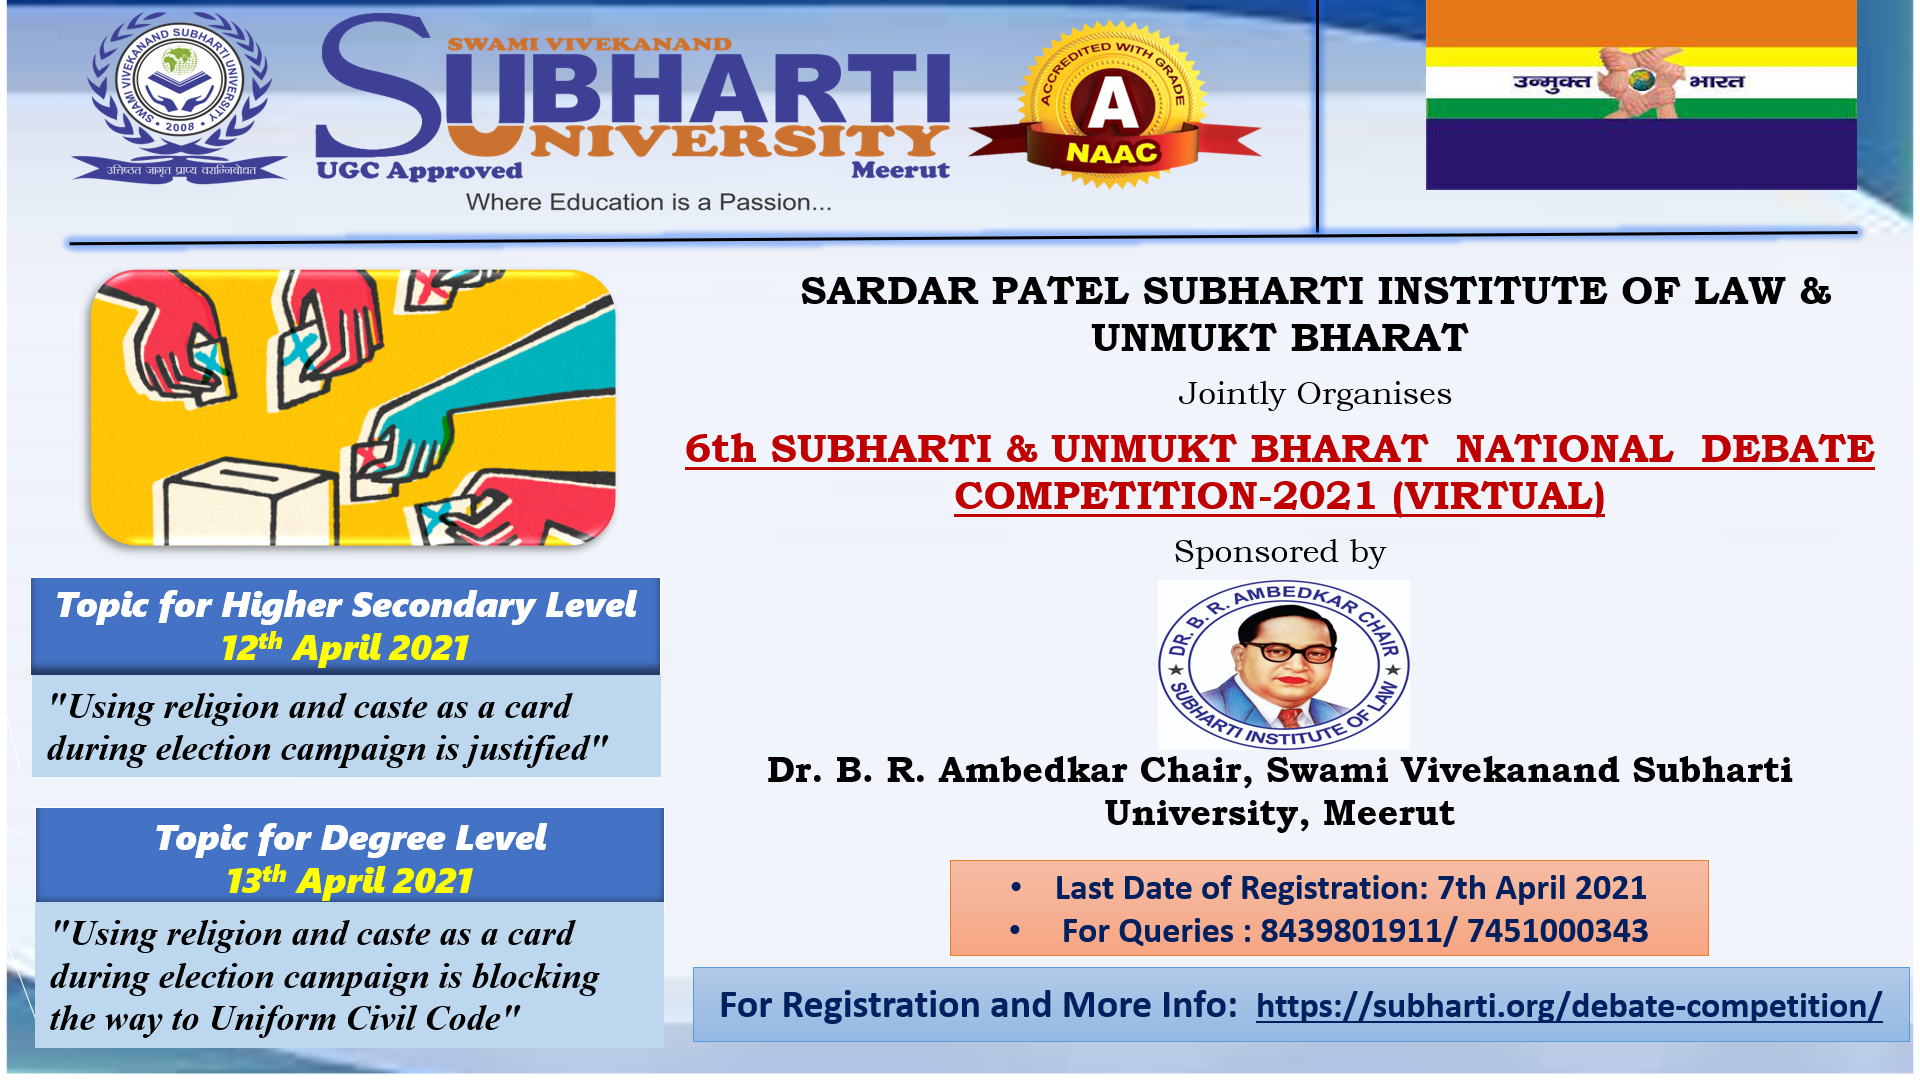 6th Subharti and Unmukt Bharat National Debate Competition-2021 (VIRTUAL)